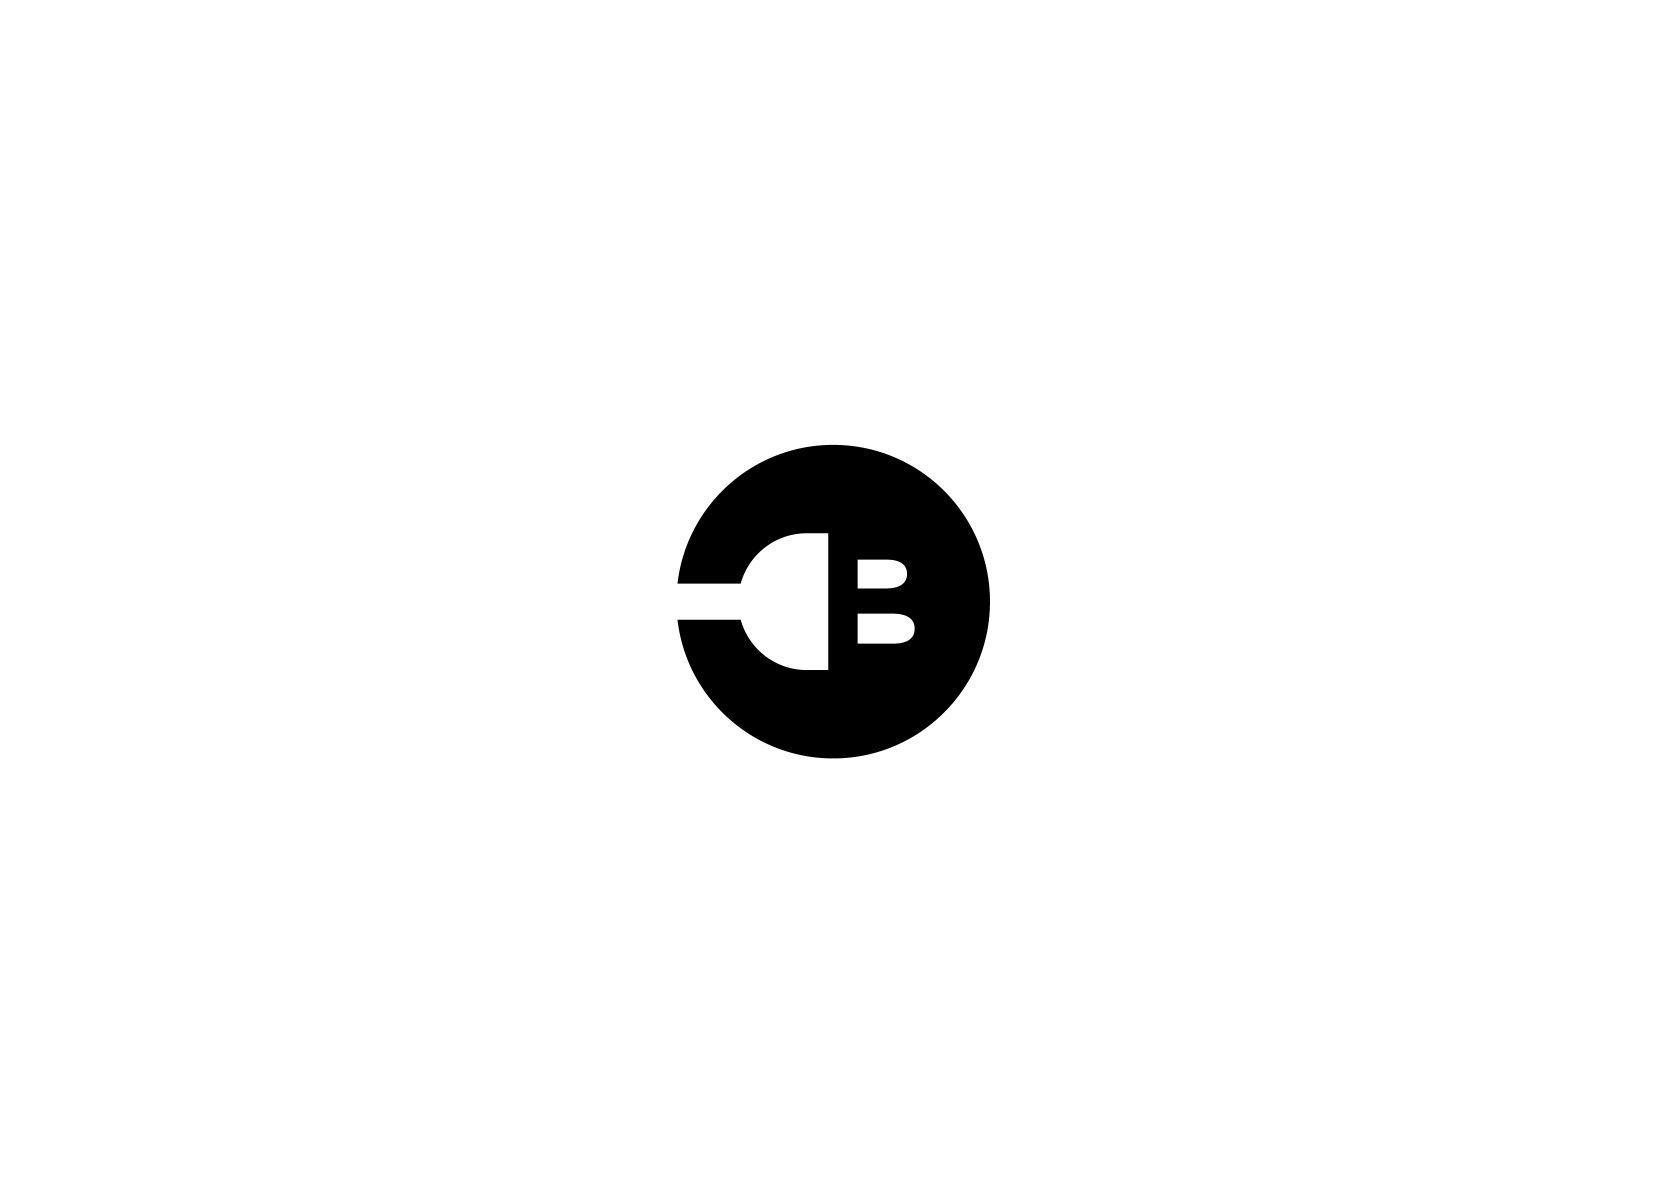 Electric Plug Logo - B electric plug logo design Balsan Trading Company logo by Hadeel S ...